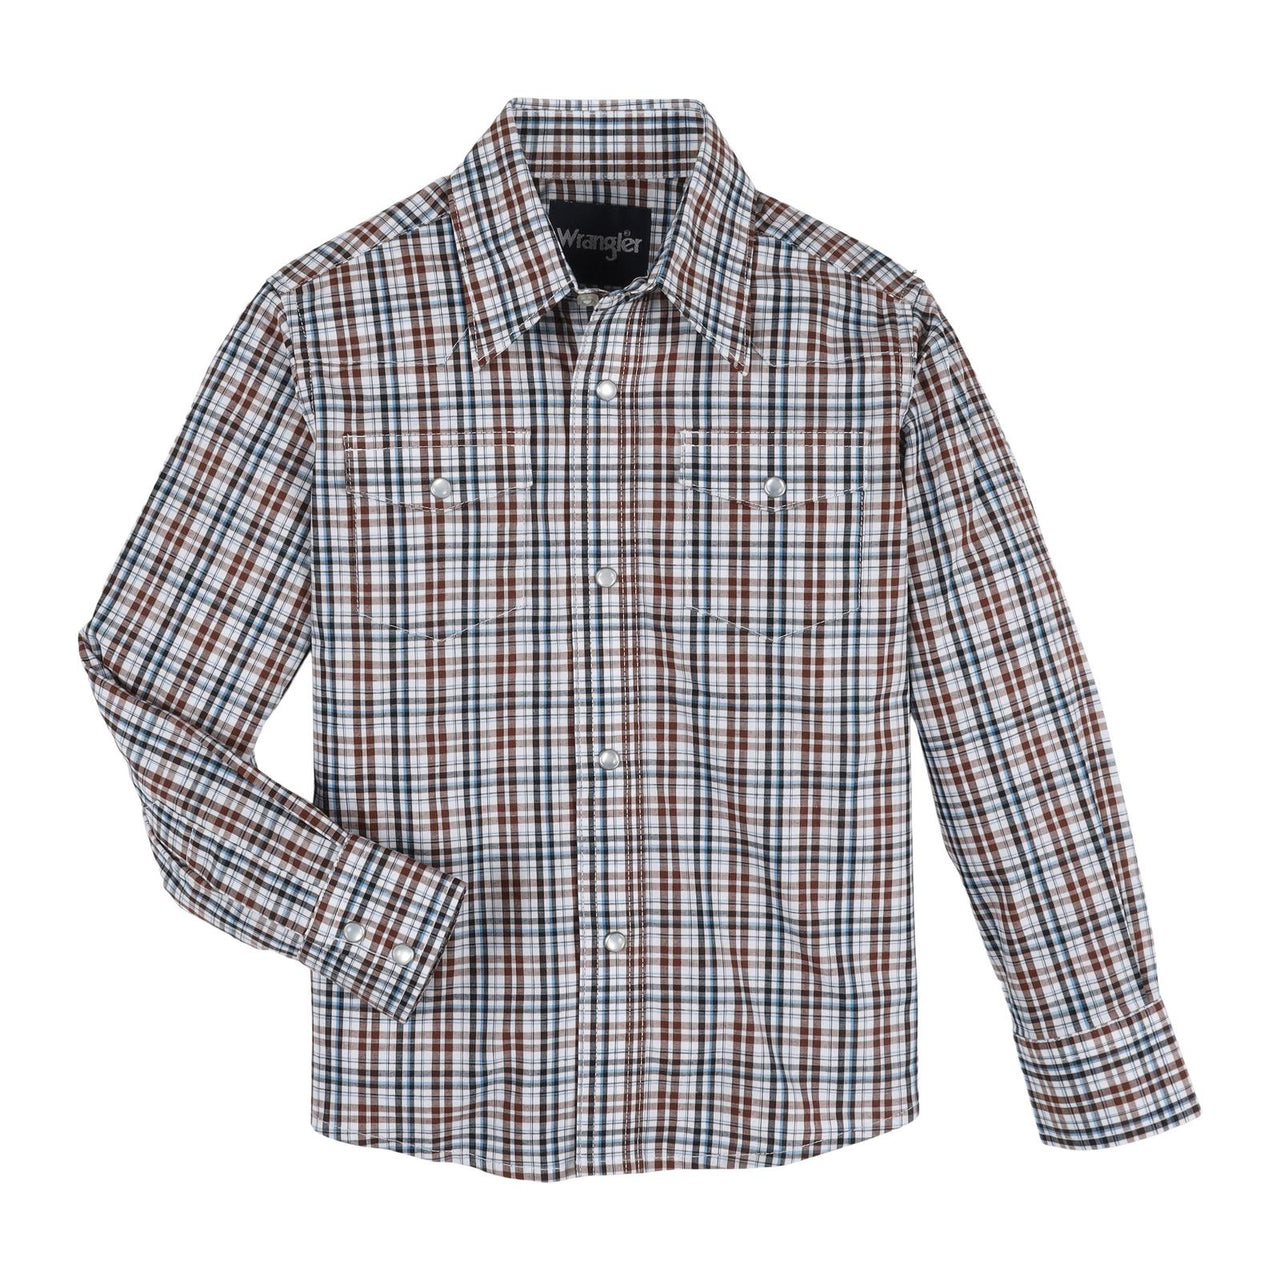 Wrangler Boy's Wrinkle Resist Long Sleeve Snap Shirt - Brown